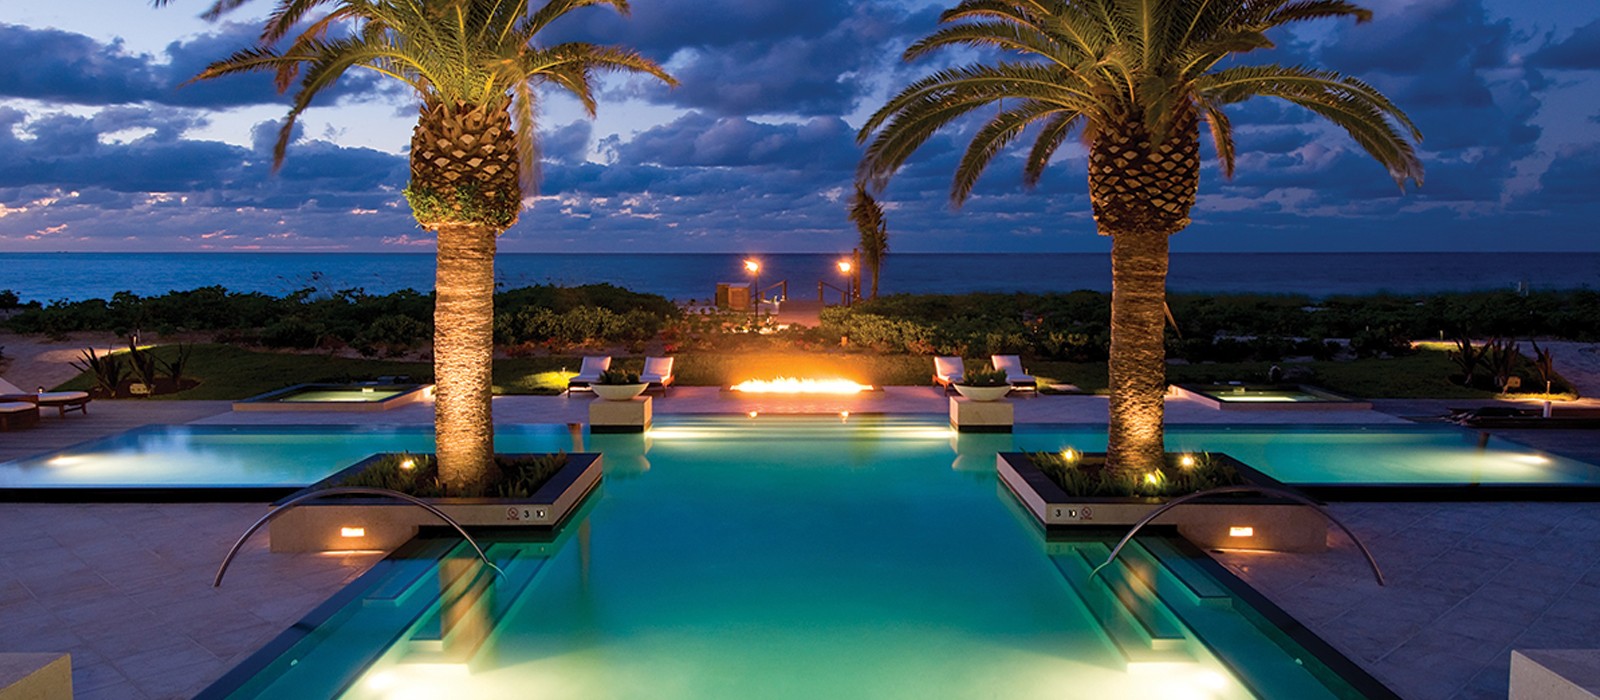 Luxury Holidays Turks & Caicos - The Grace Bay Club - Header